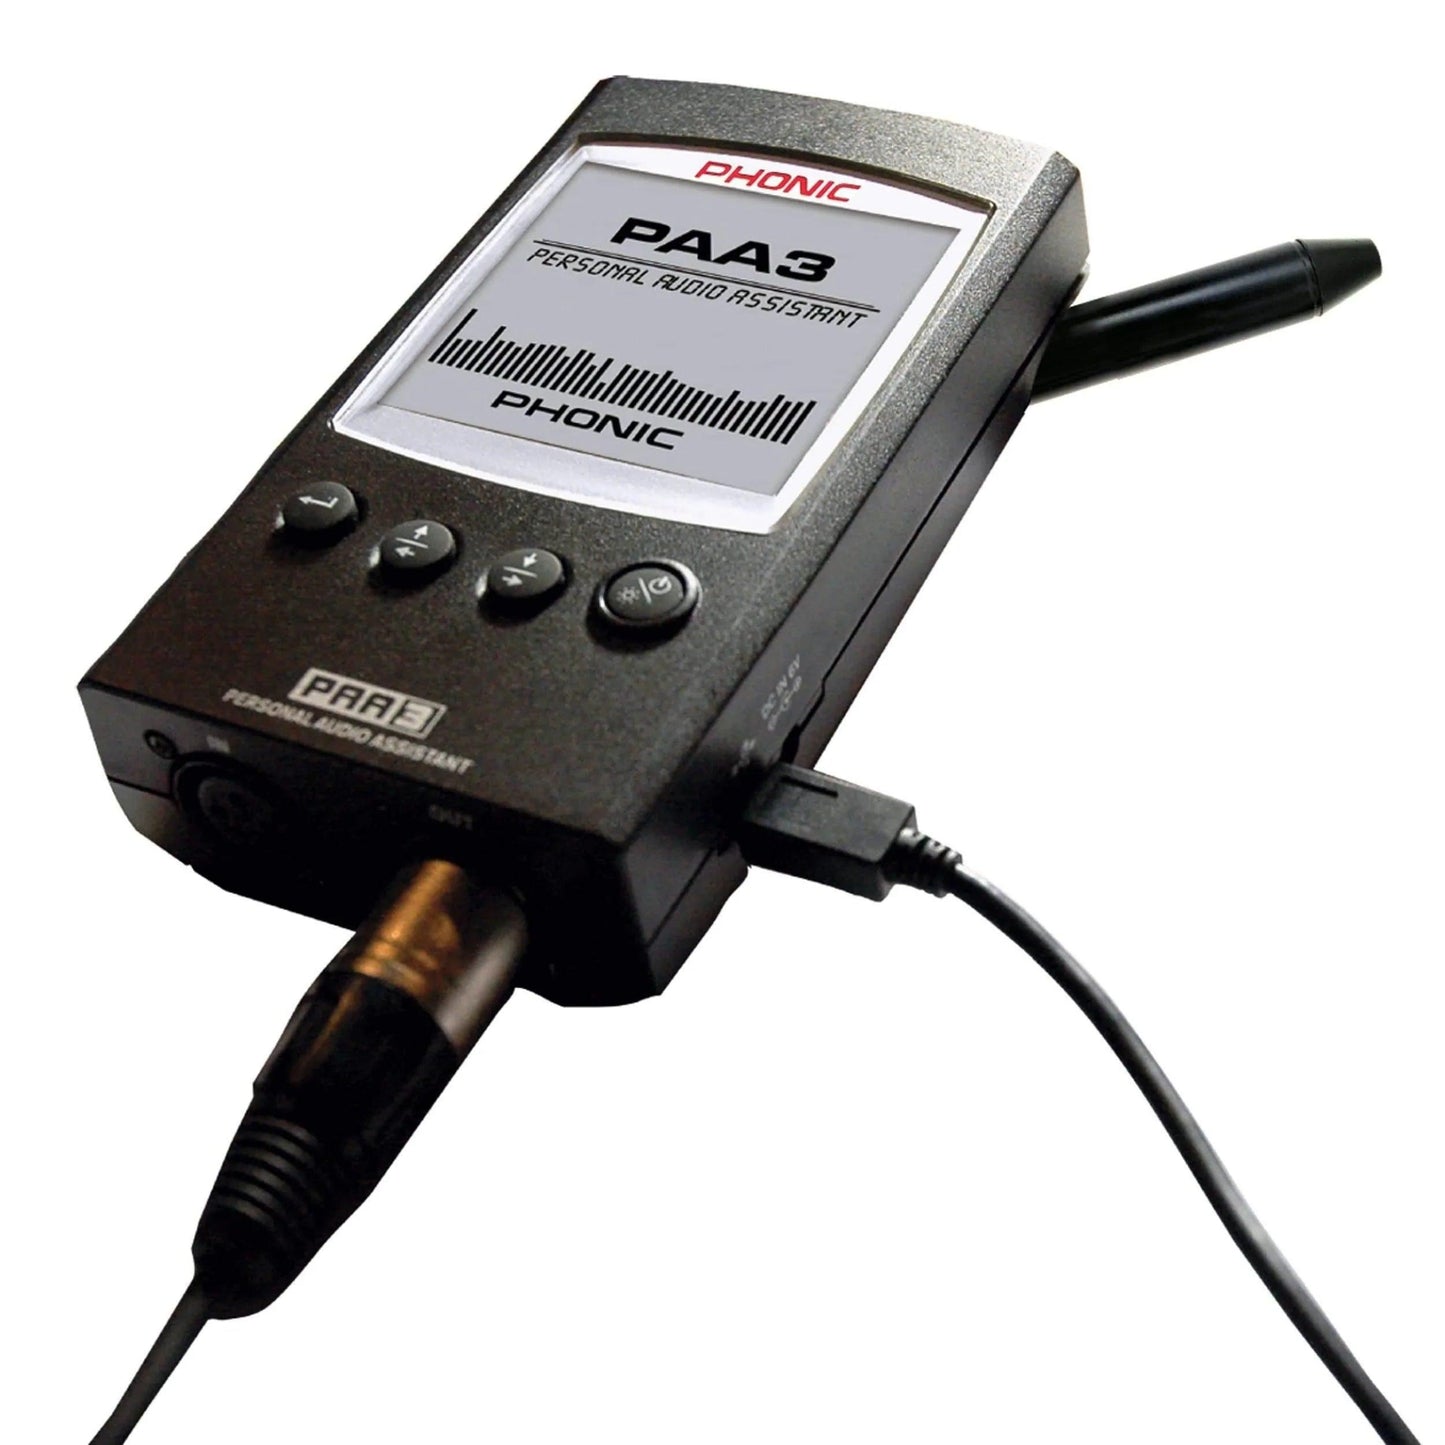 Phonic PAA3 Handheld Audio Analyzer with USB Interface